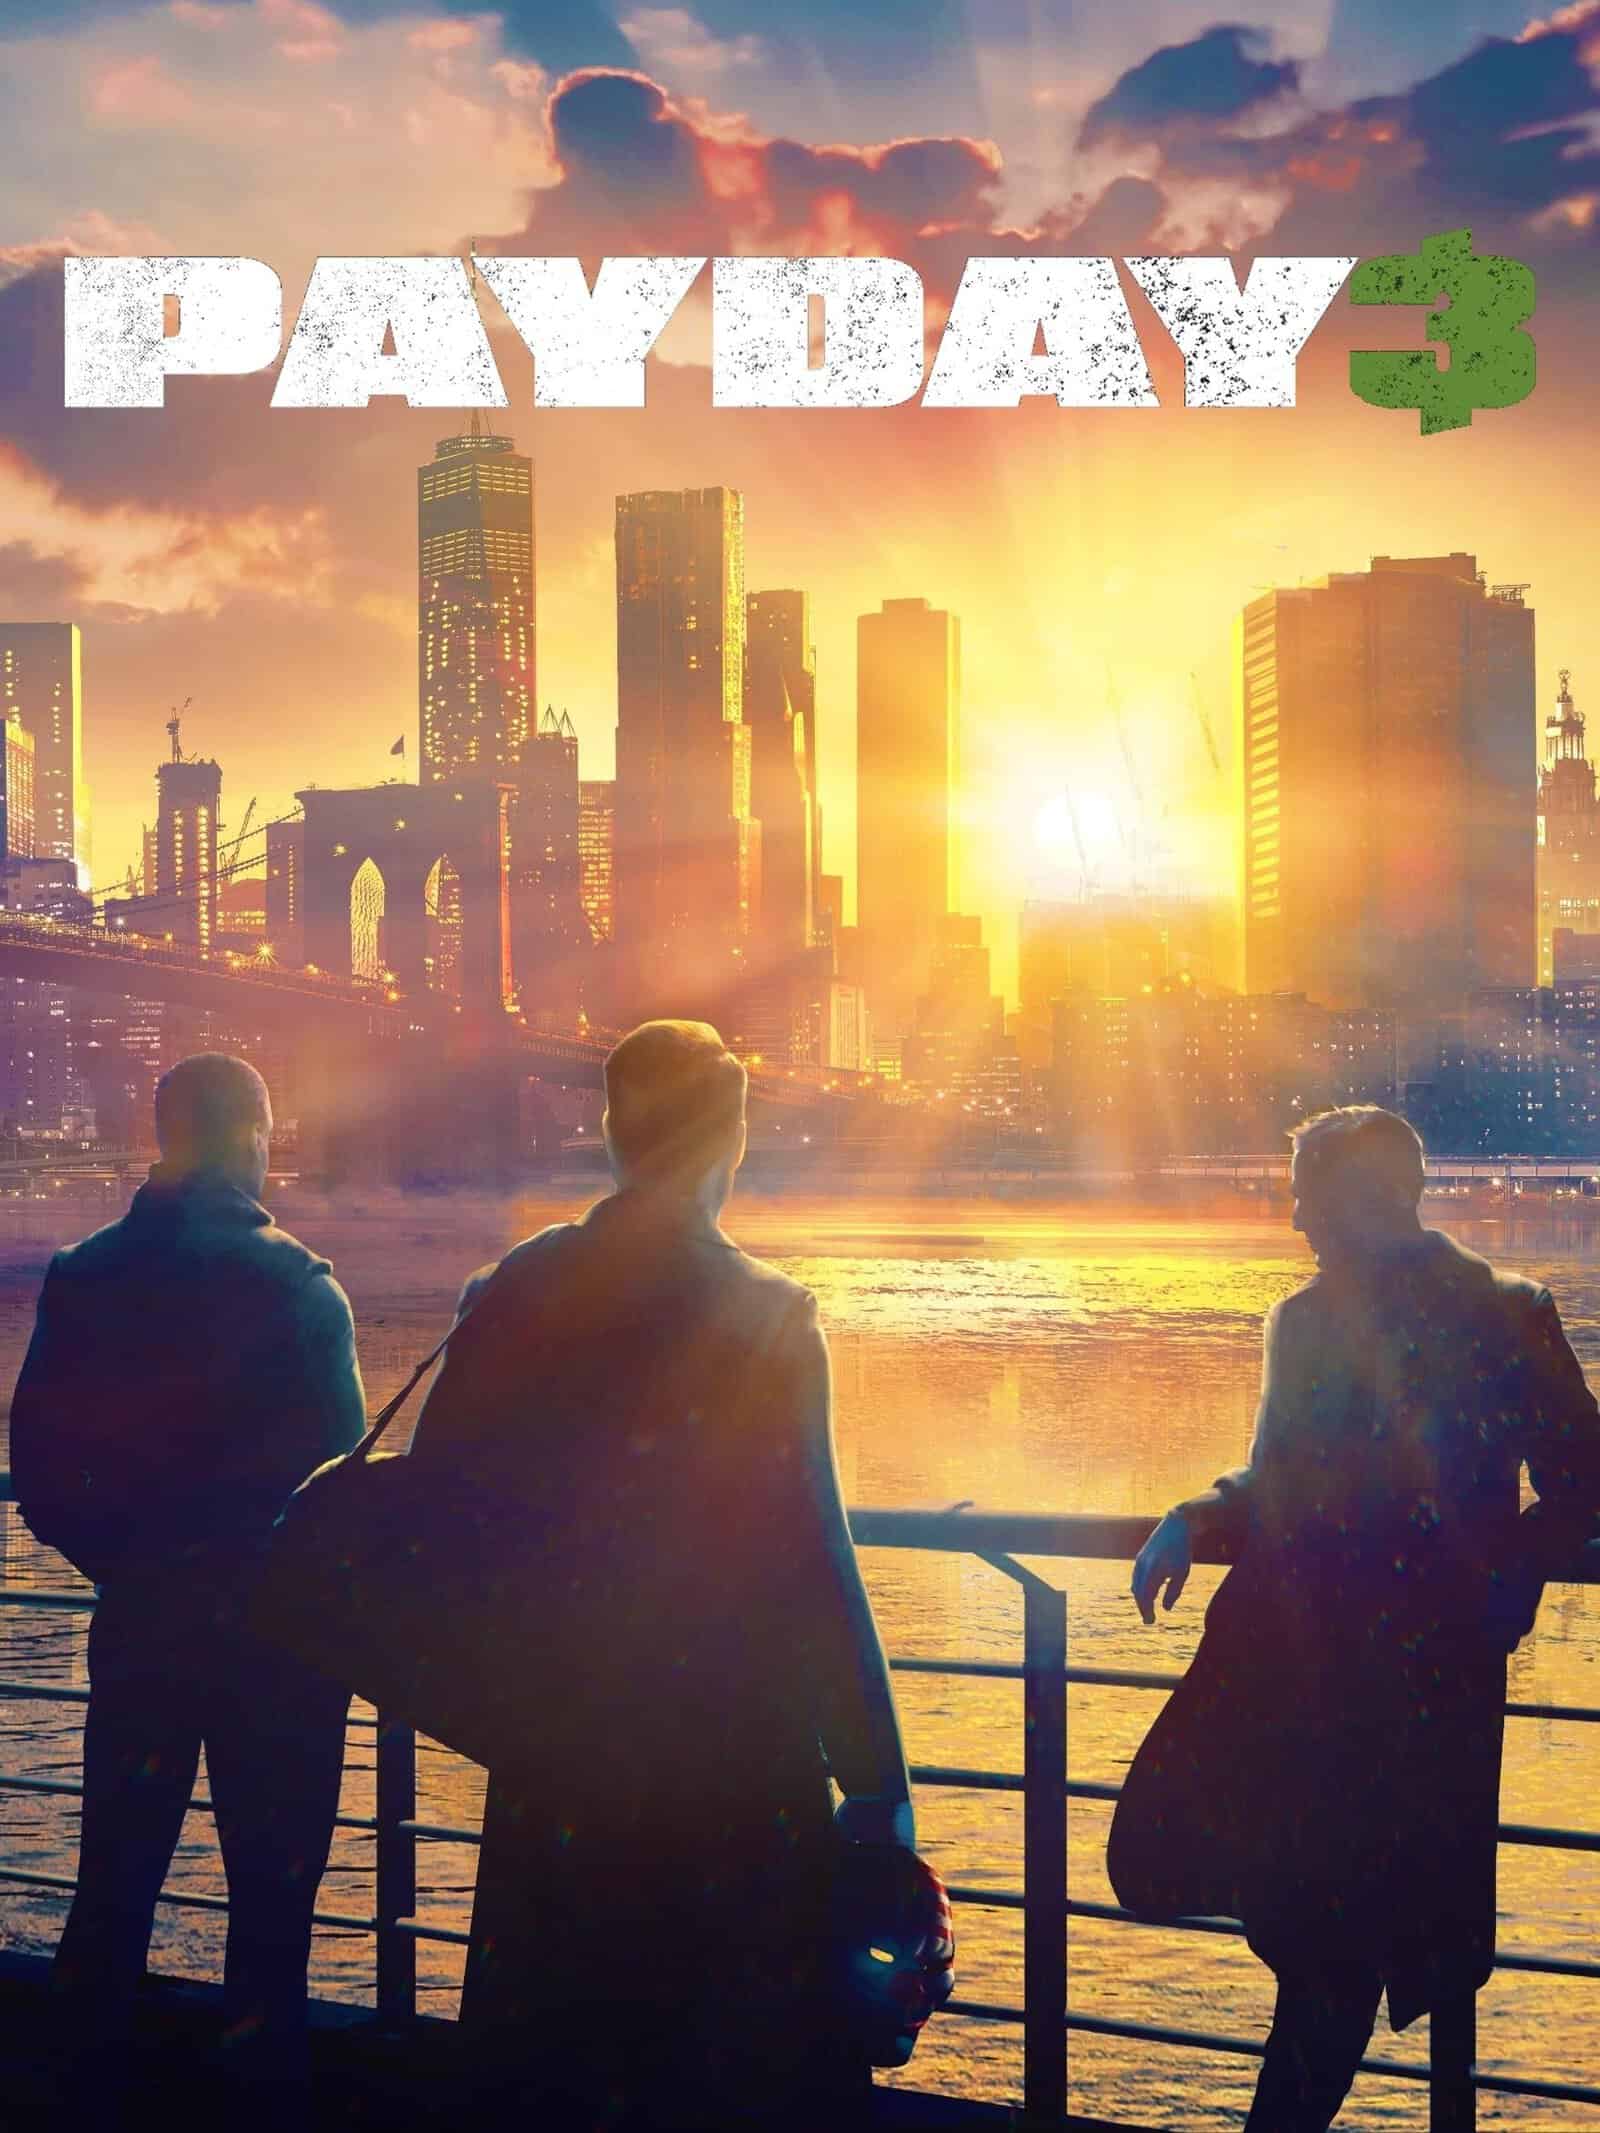 Is Payday 3 cross-platform?